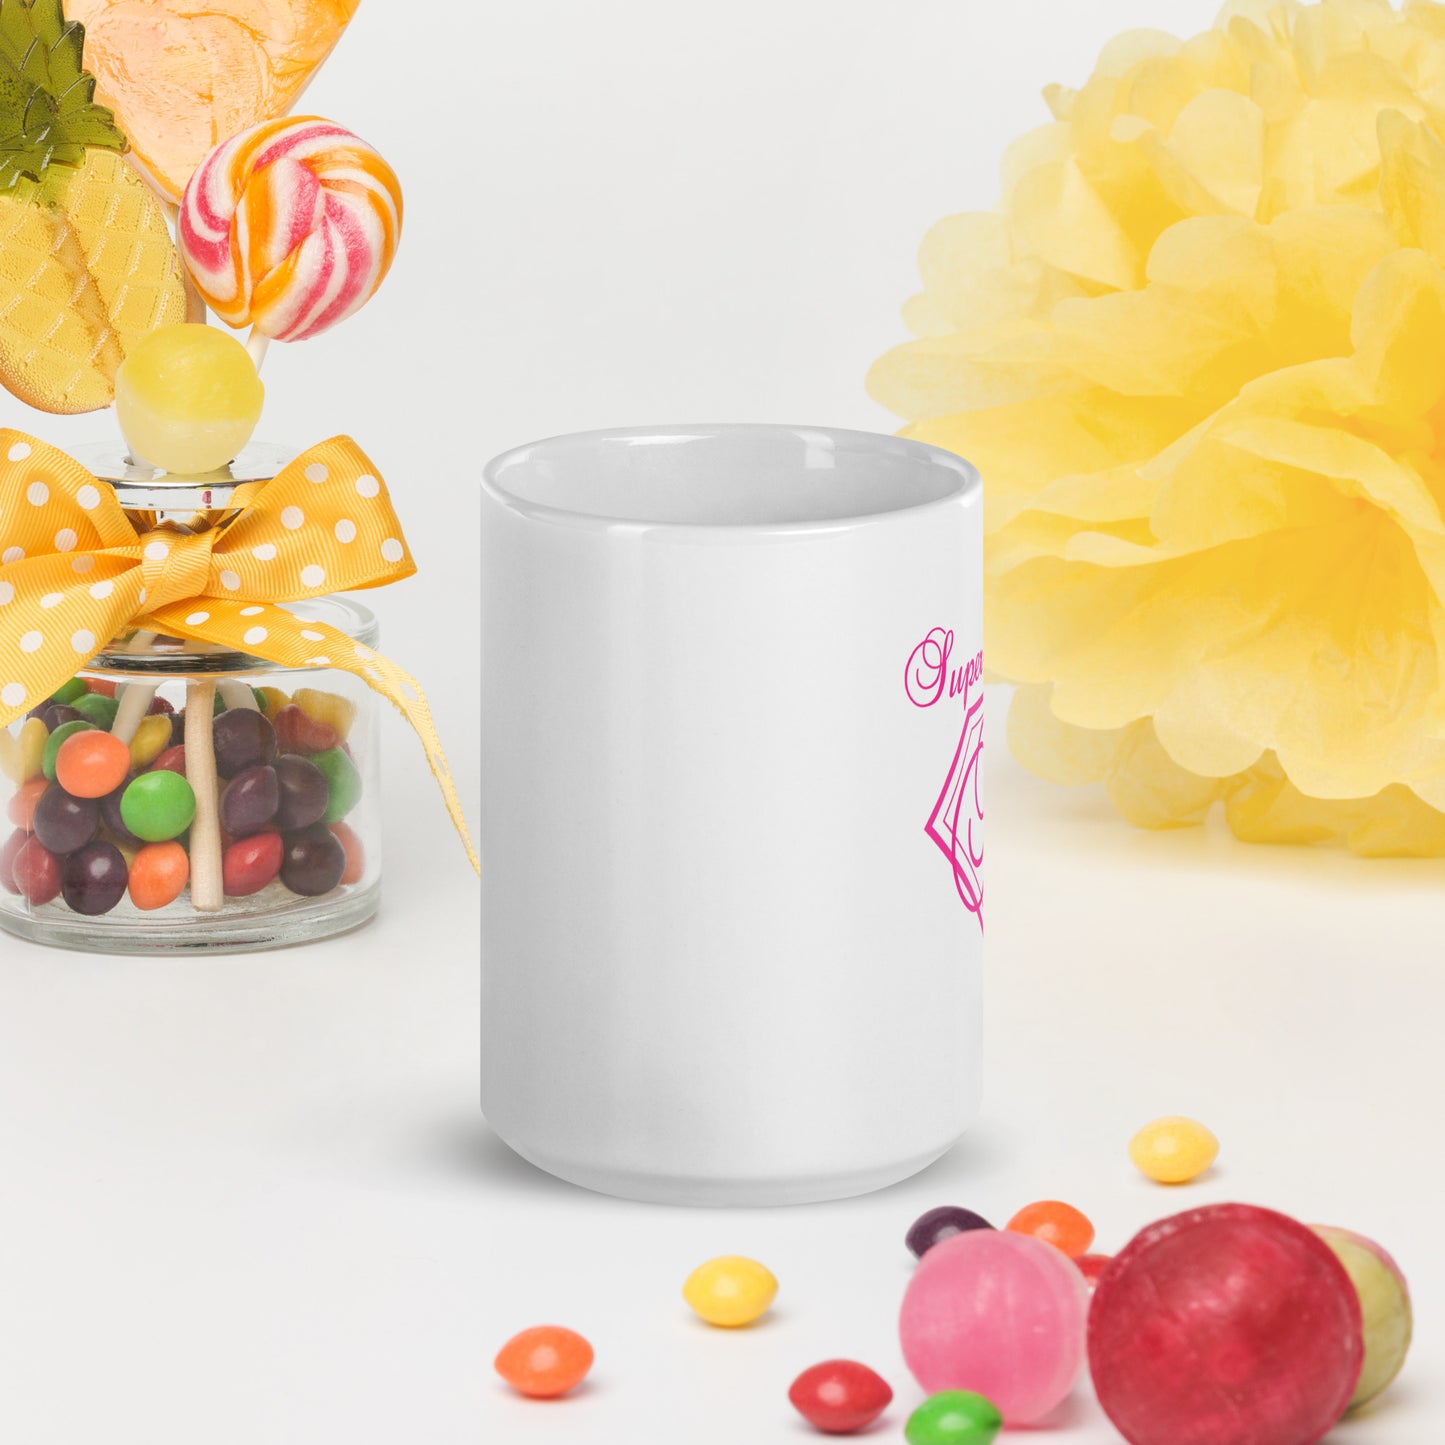 Super Memaw white glossy mug - Pink Print